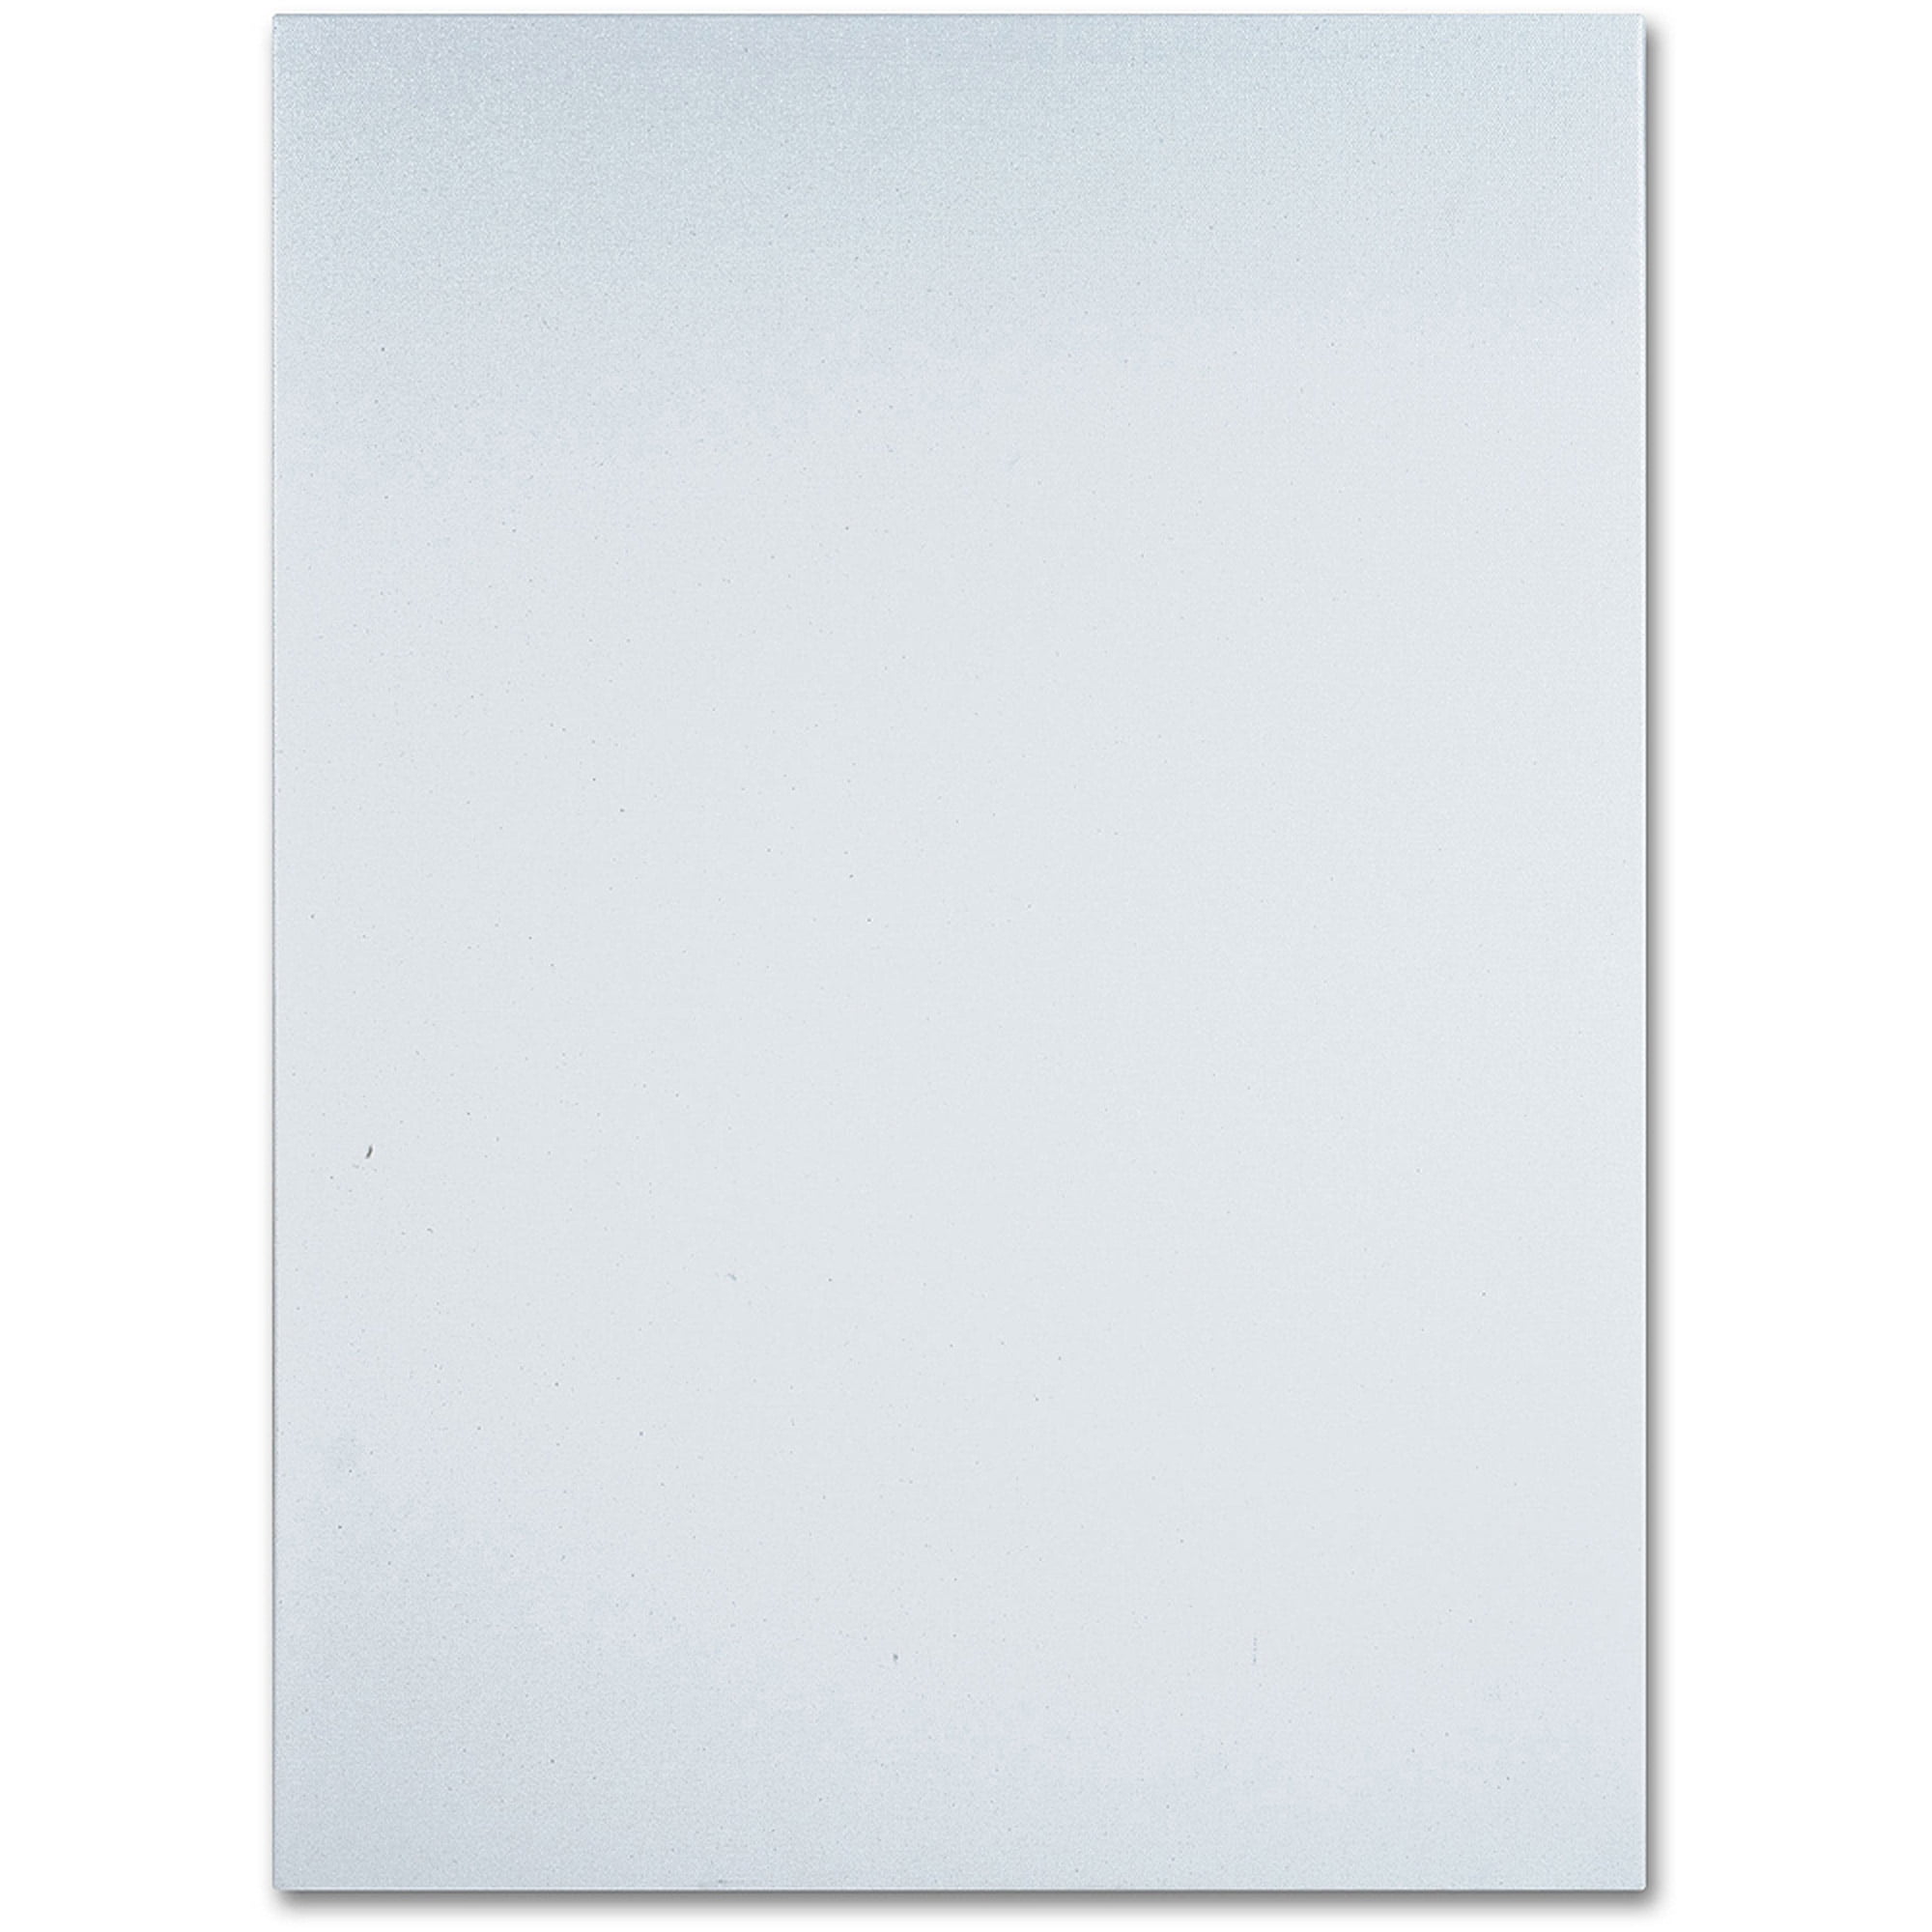 Trademark Fine Art Professional Blank White Canvas on Stretcher Bars, 30 x 40